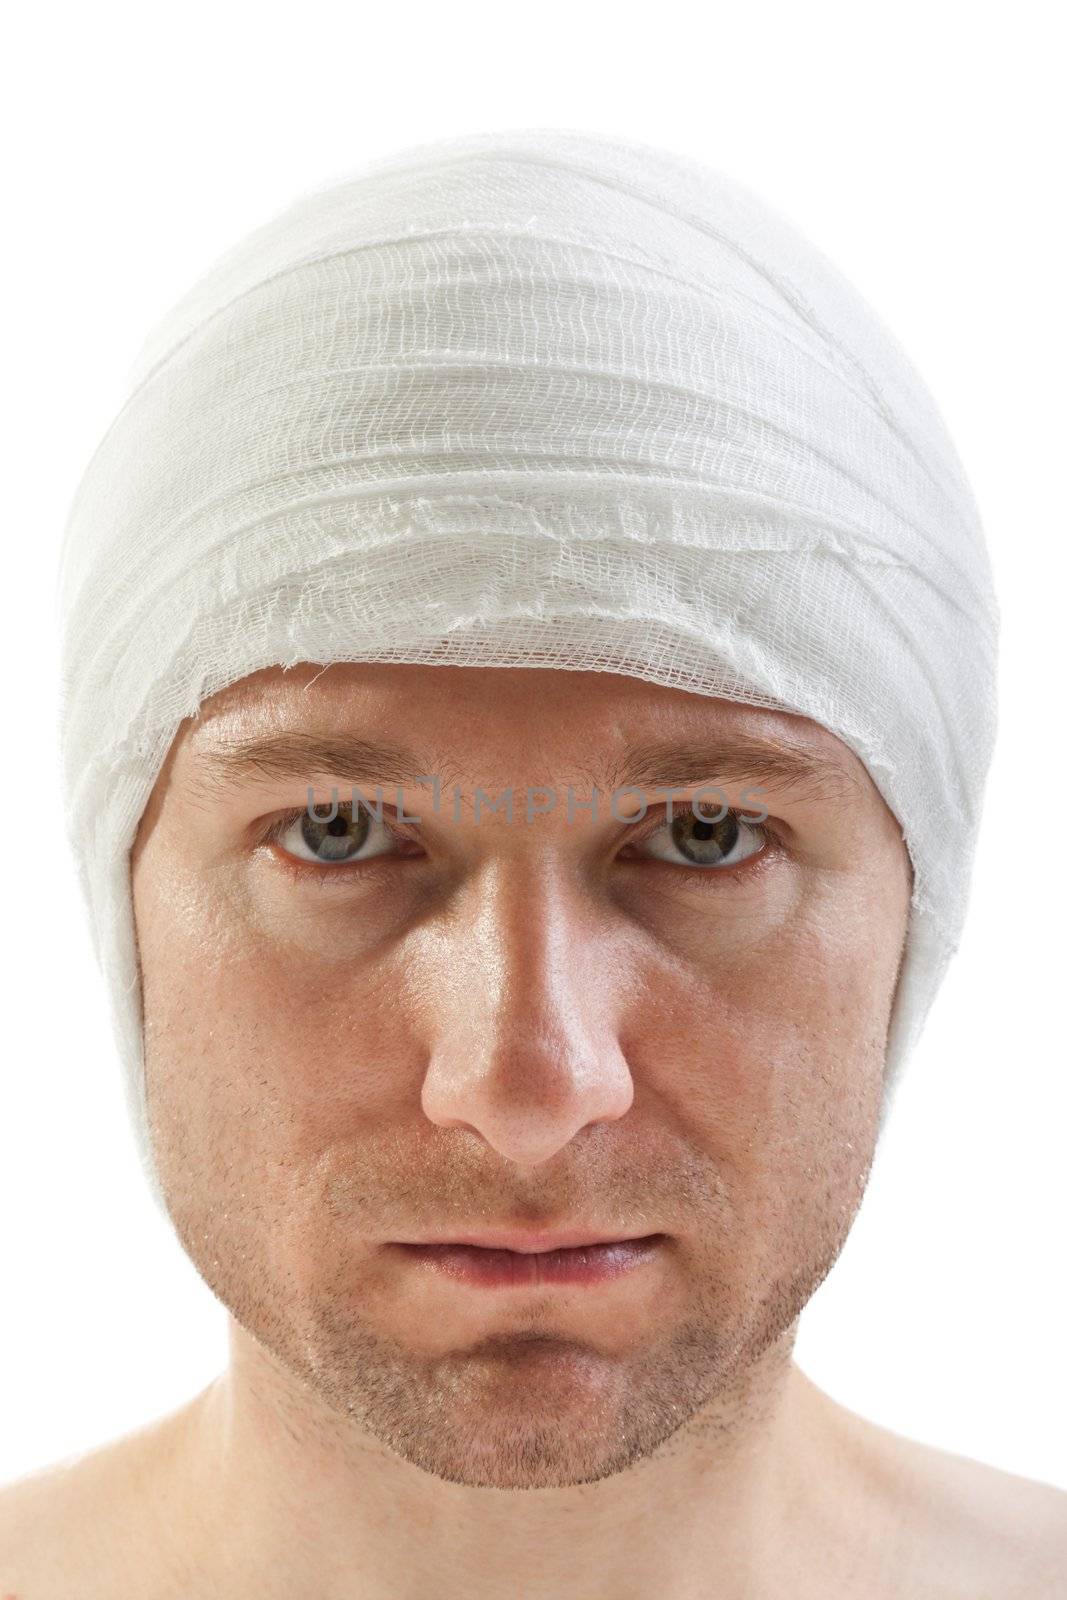 White bandage on human brain concussion wound head